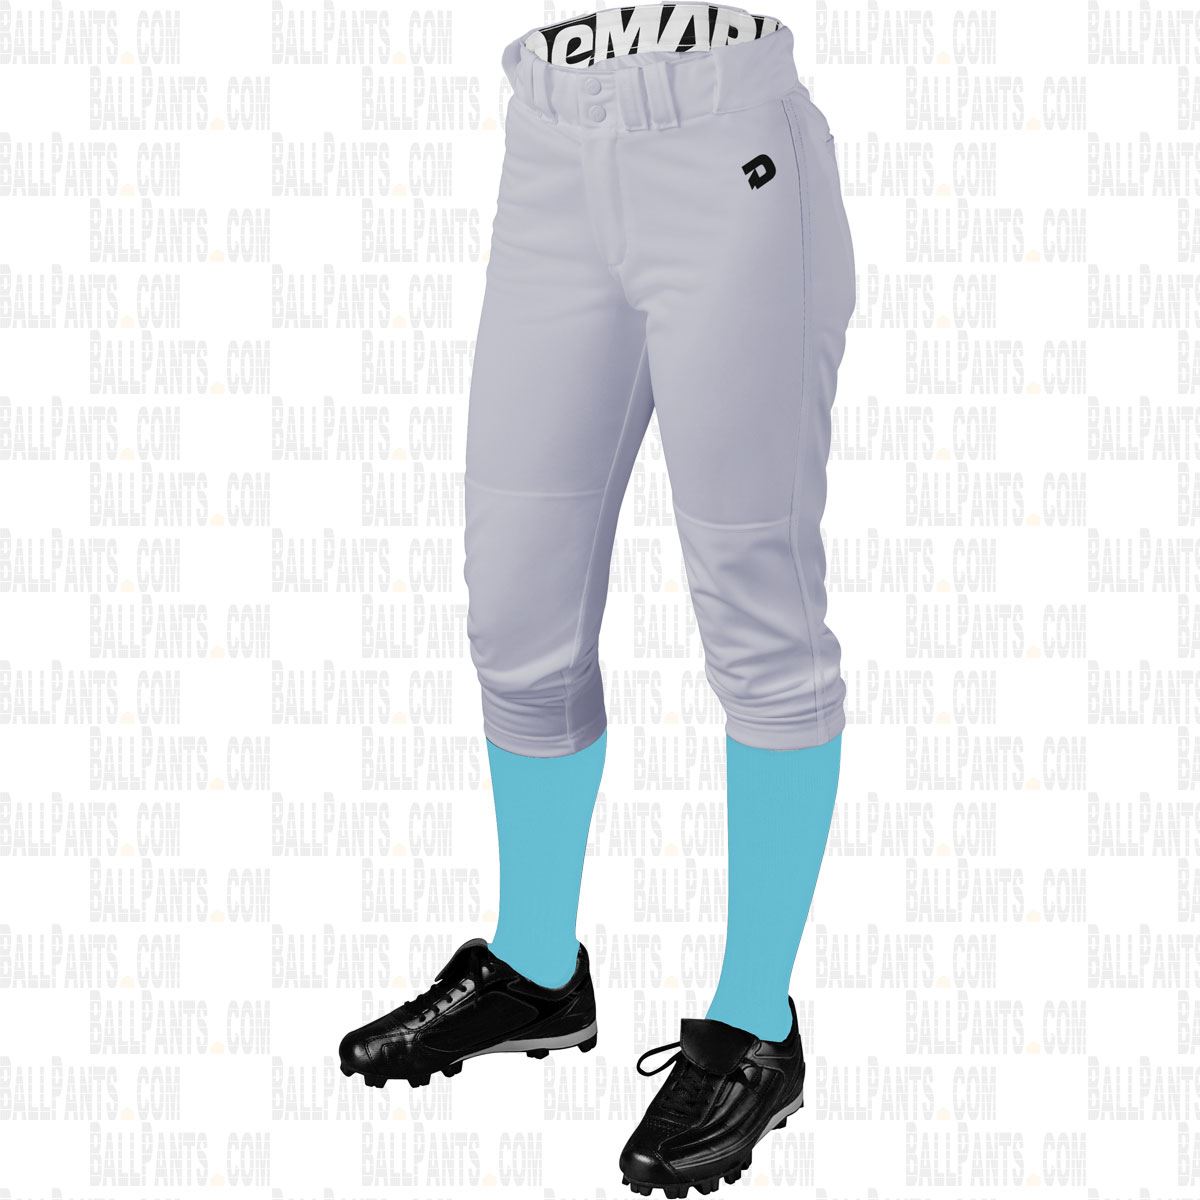 Demarini Fastpitch Softball Pantalones para mujer Teamwear con cinturón WTC7605 